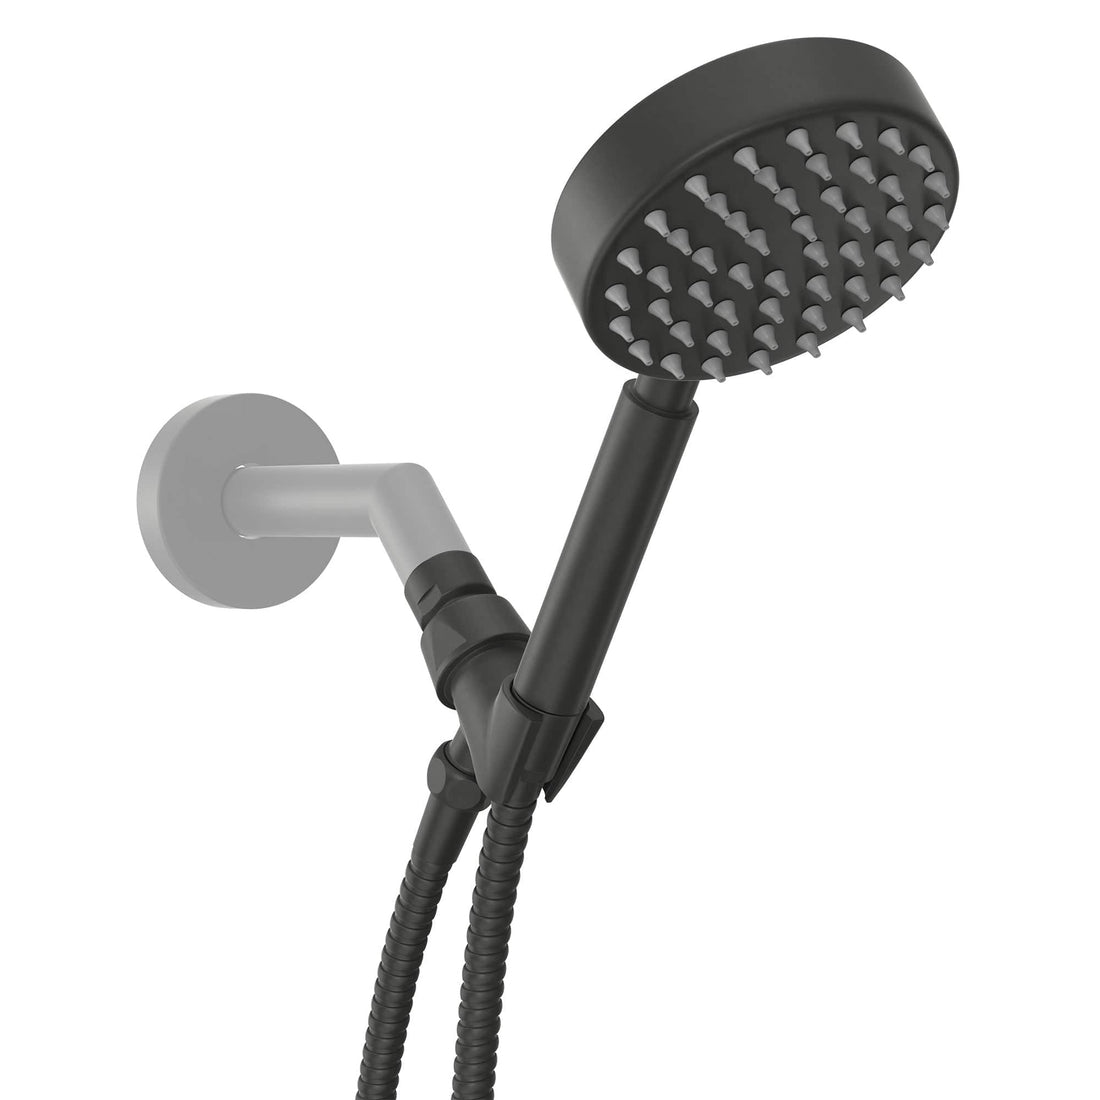 Matte Black / 2.5 All Metal Handheld Shower head Set - 2.5 GPM - The Shower Head Store